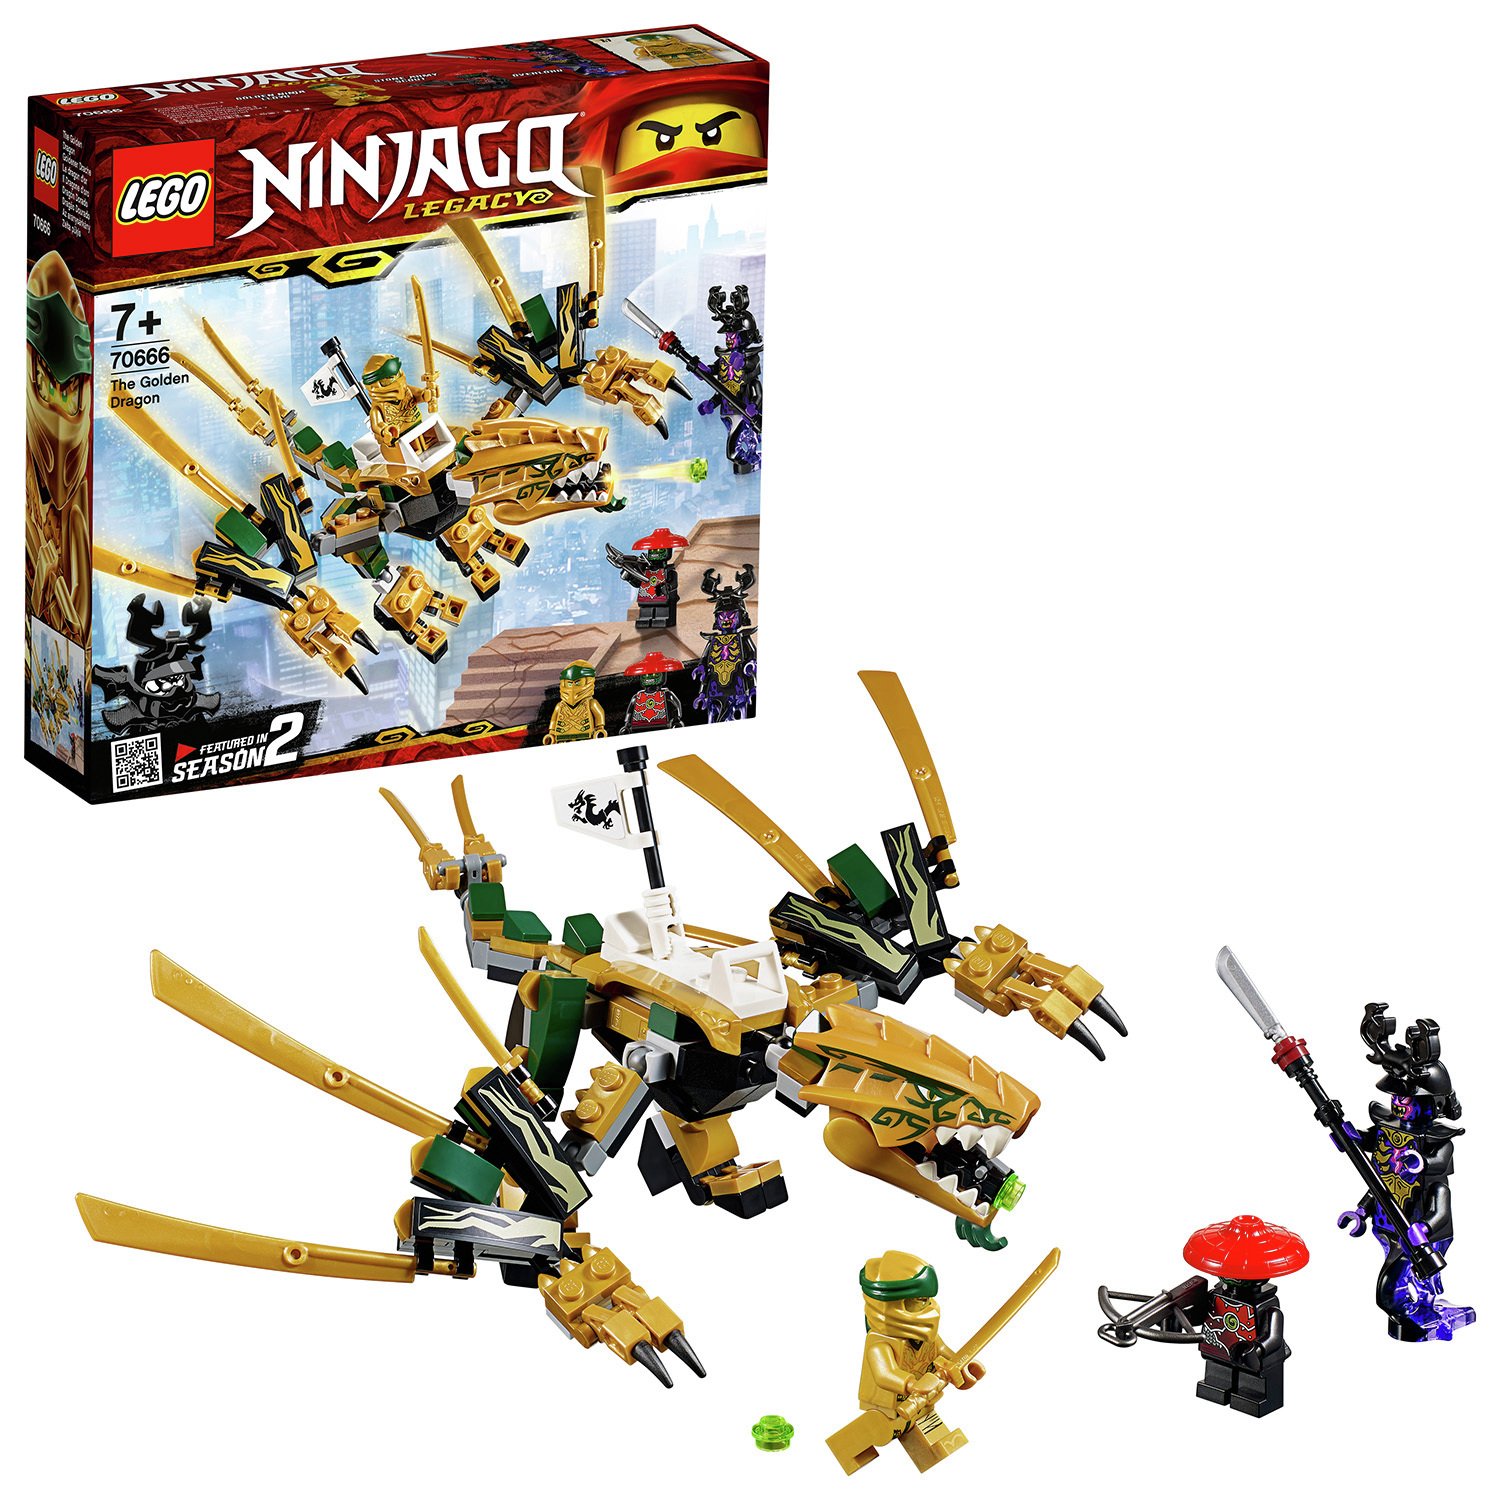 golden ninja lego sets